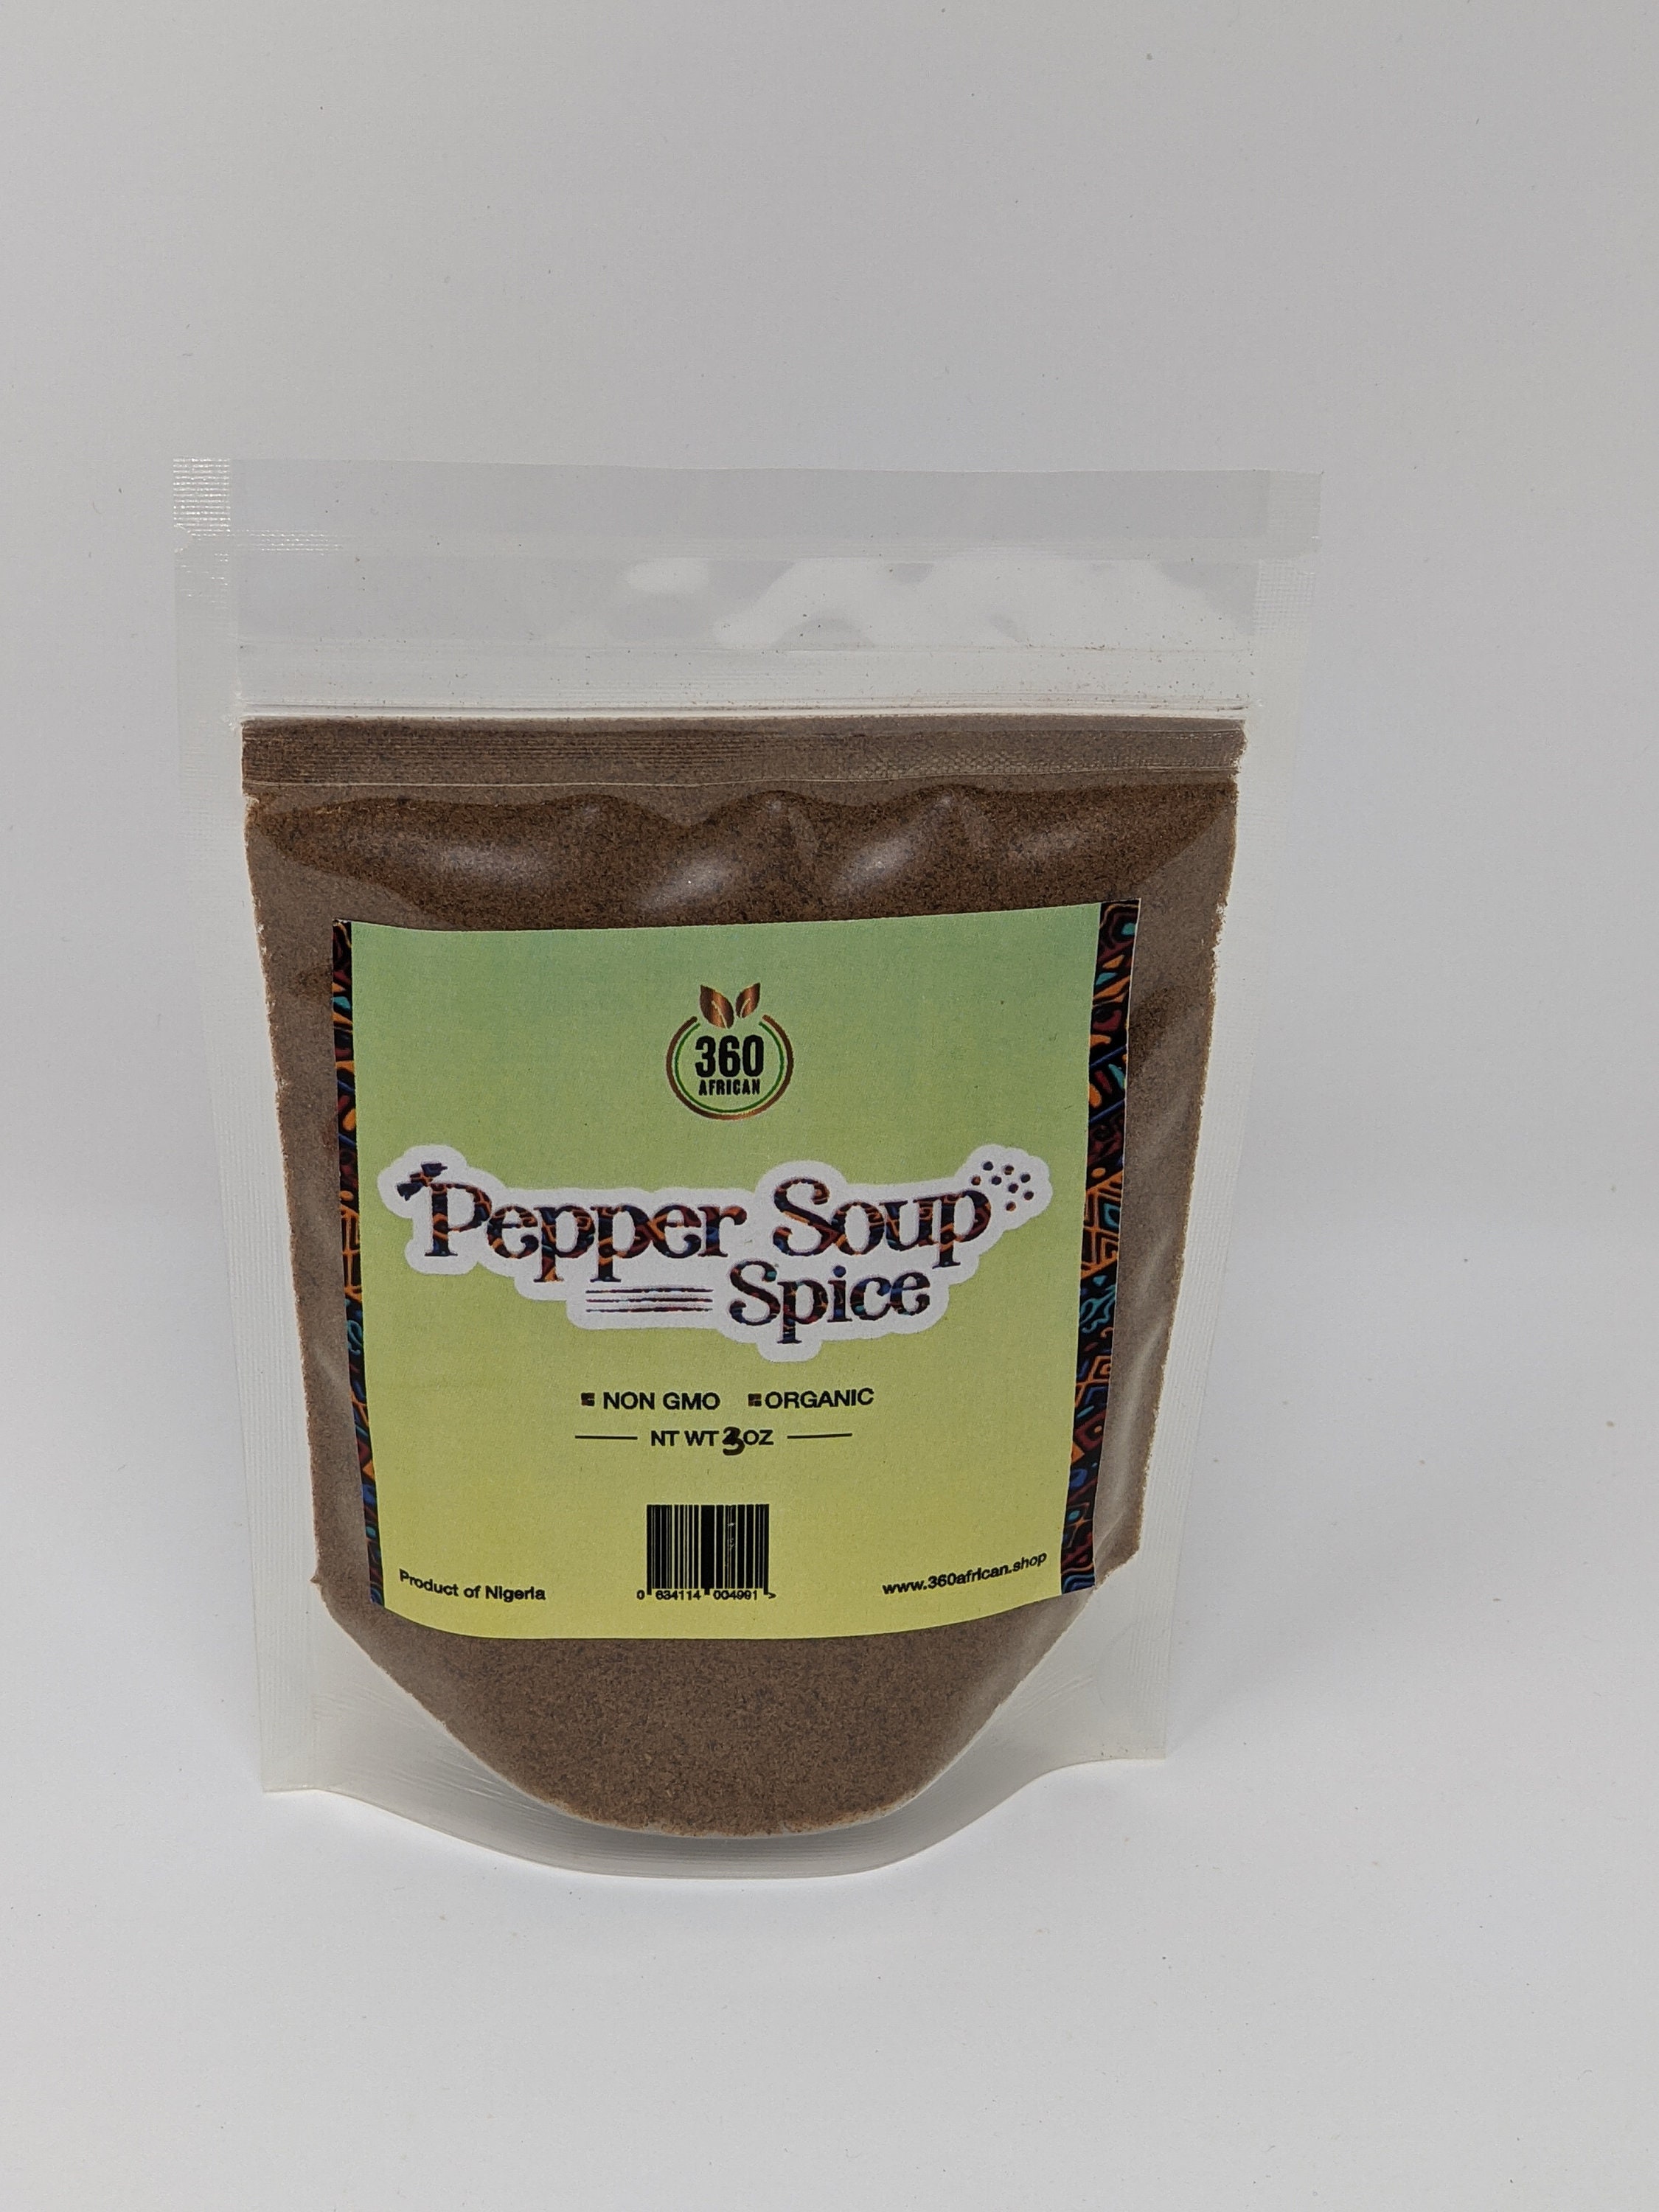 Pepper soup powder / seasoning (Hot) by Ola-Ola – Opparel